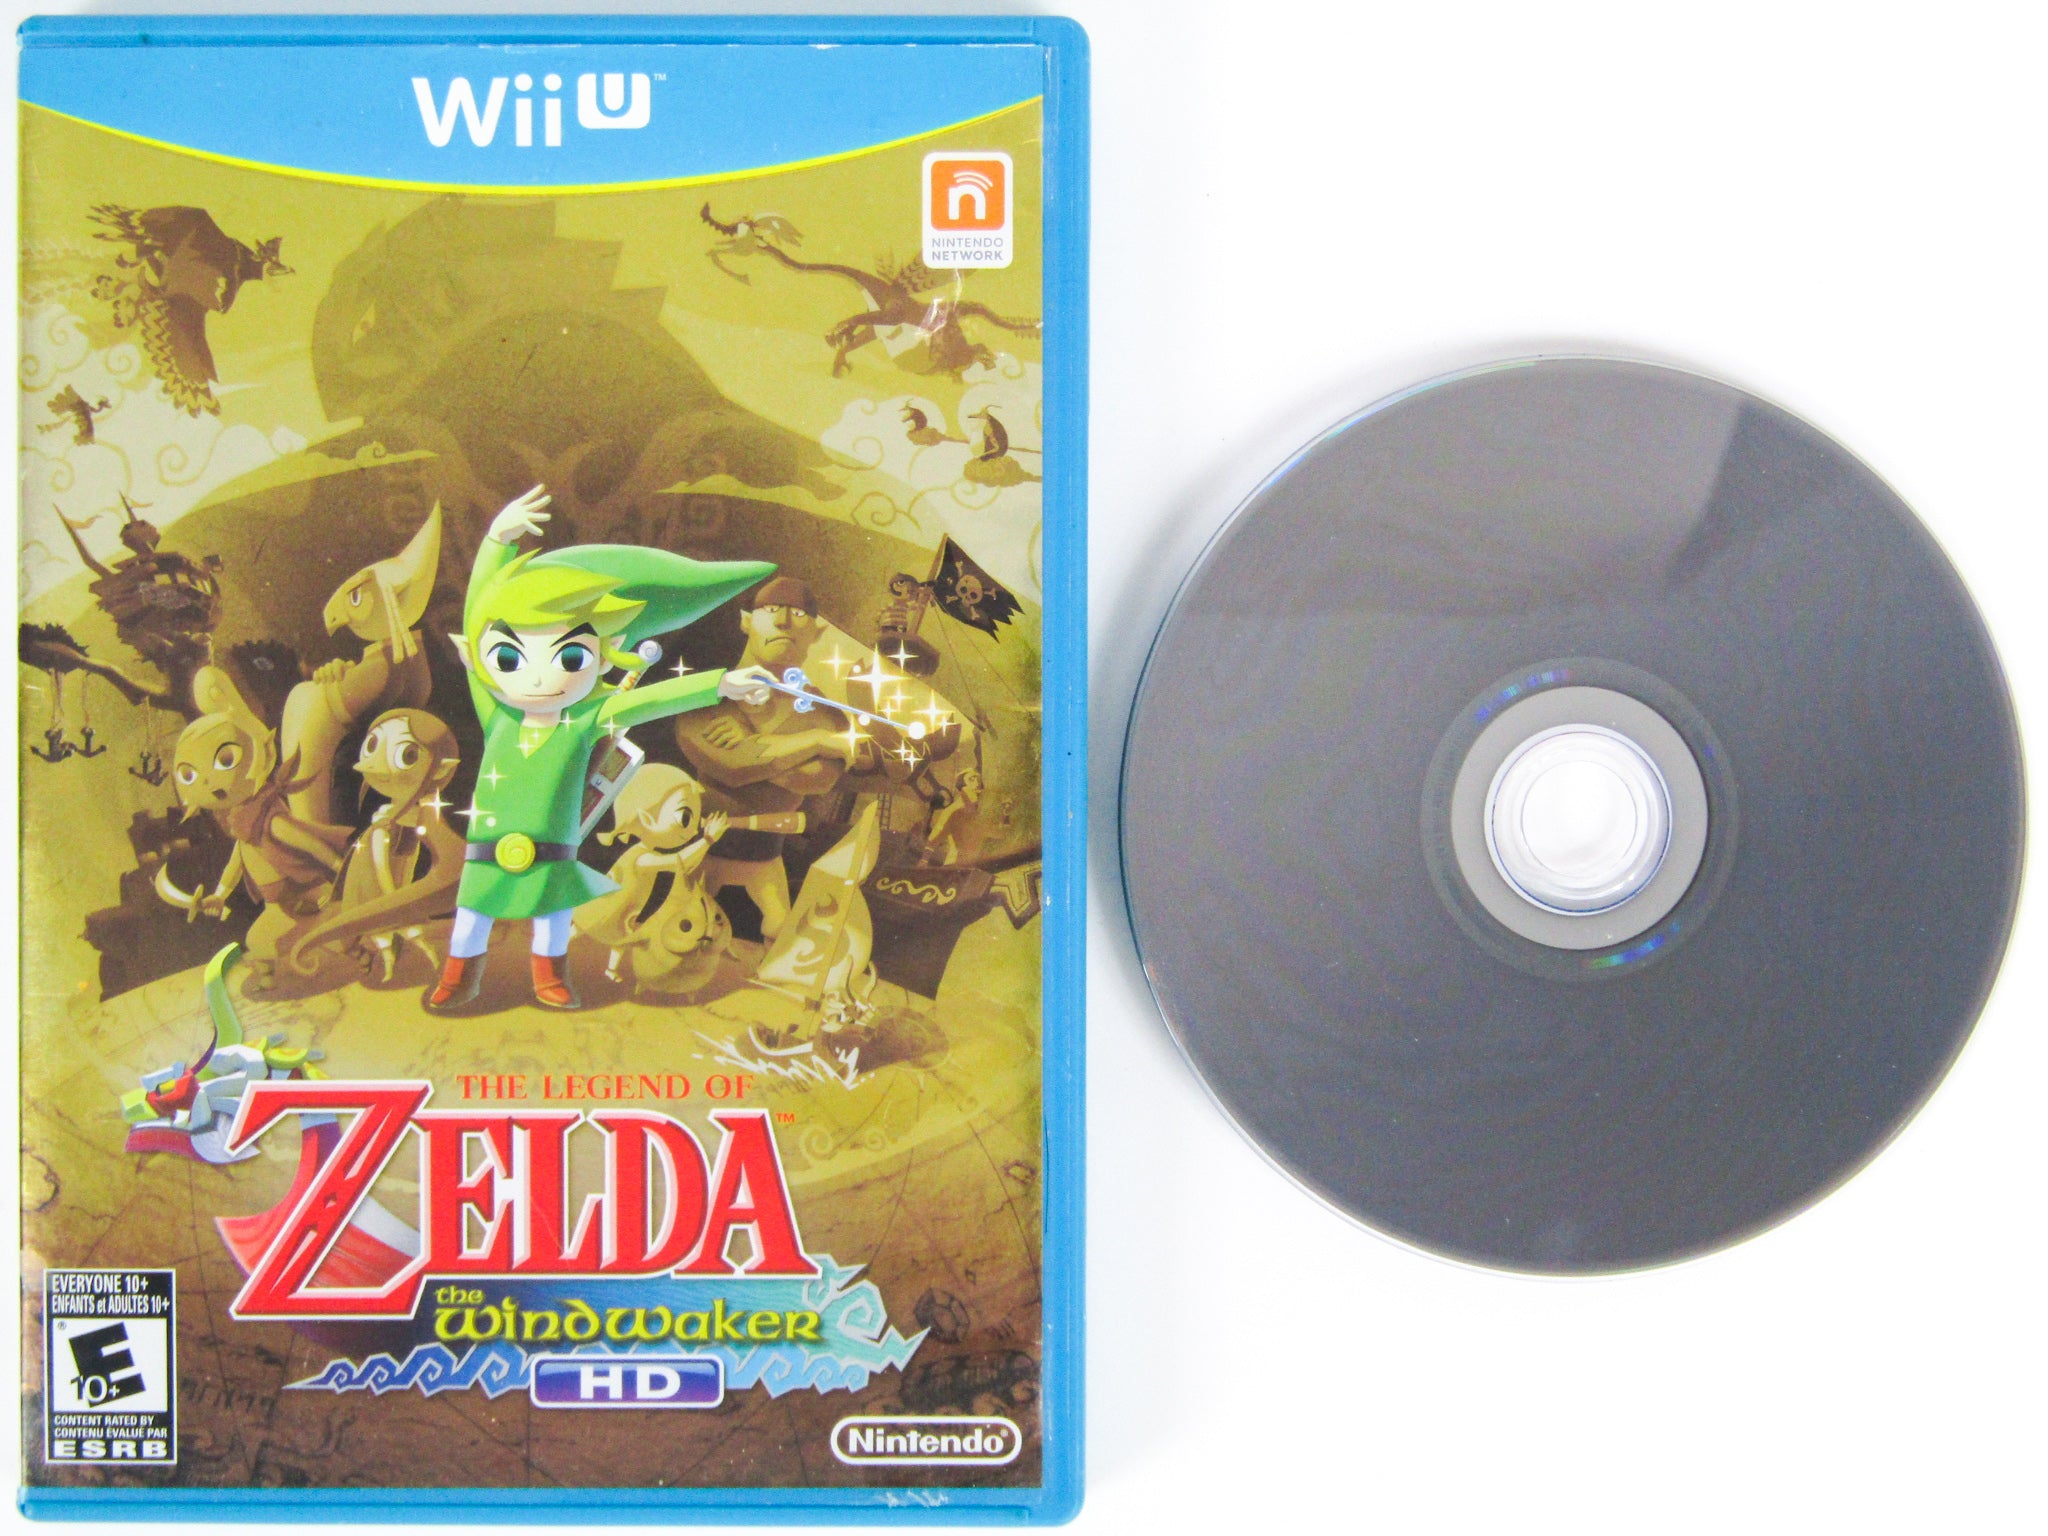 Zelda Wind Waker HD, Item, Box, and Manual